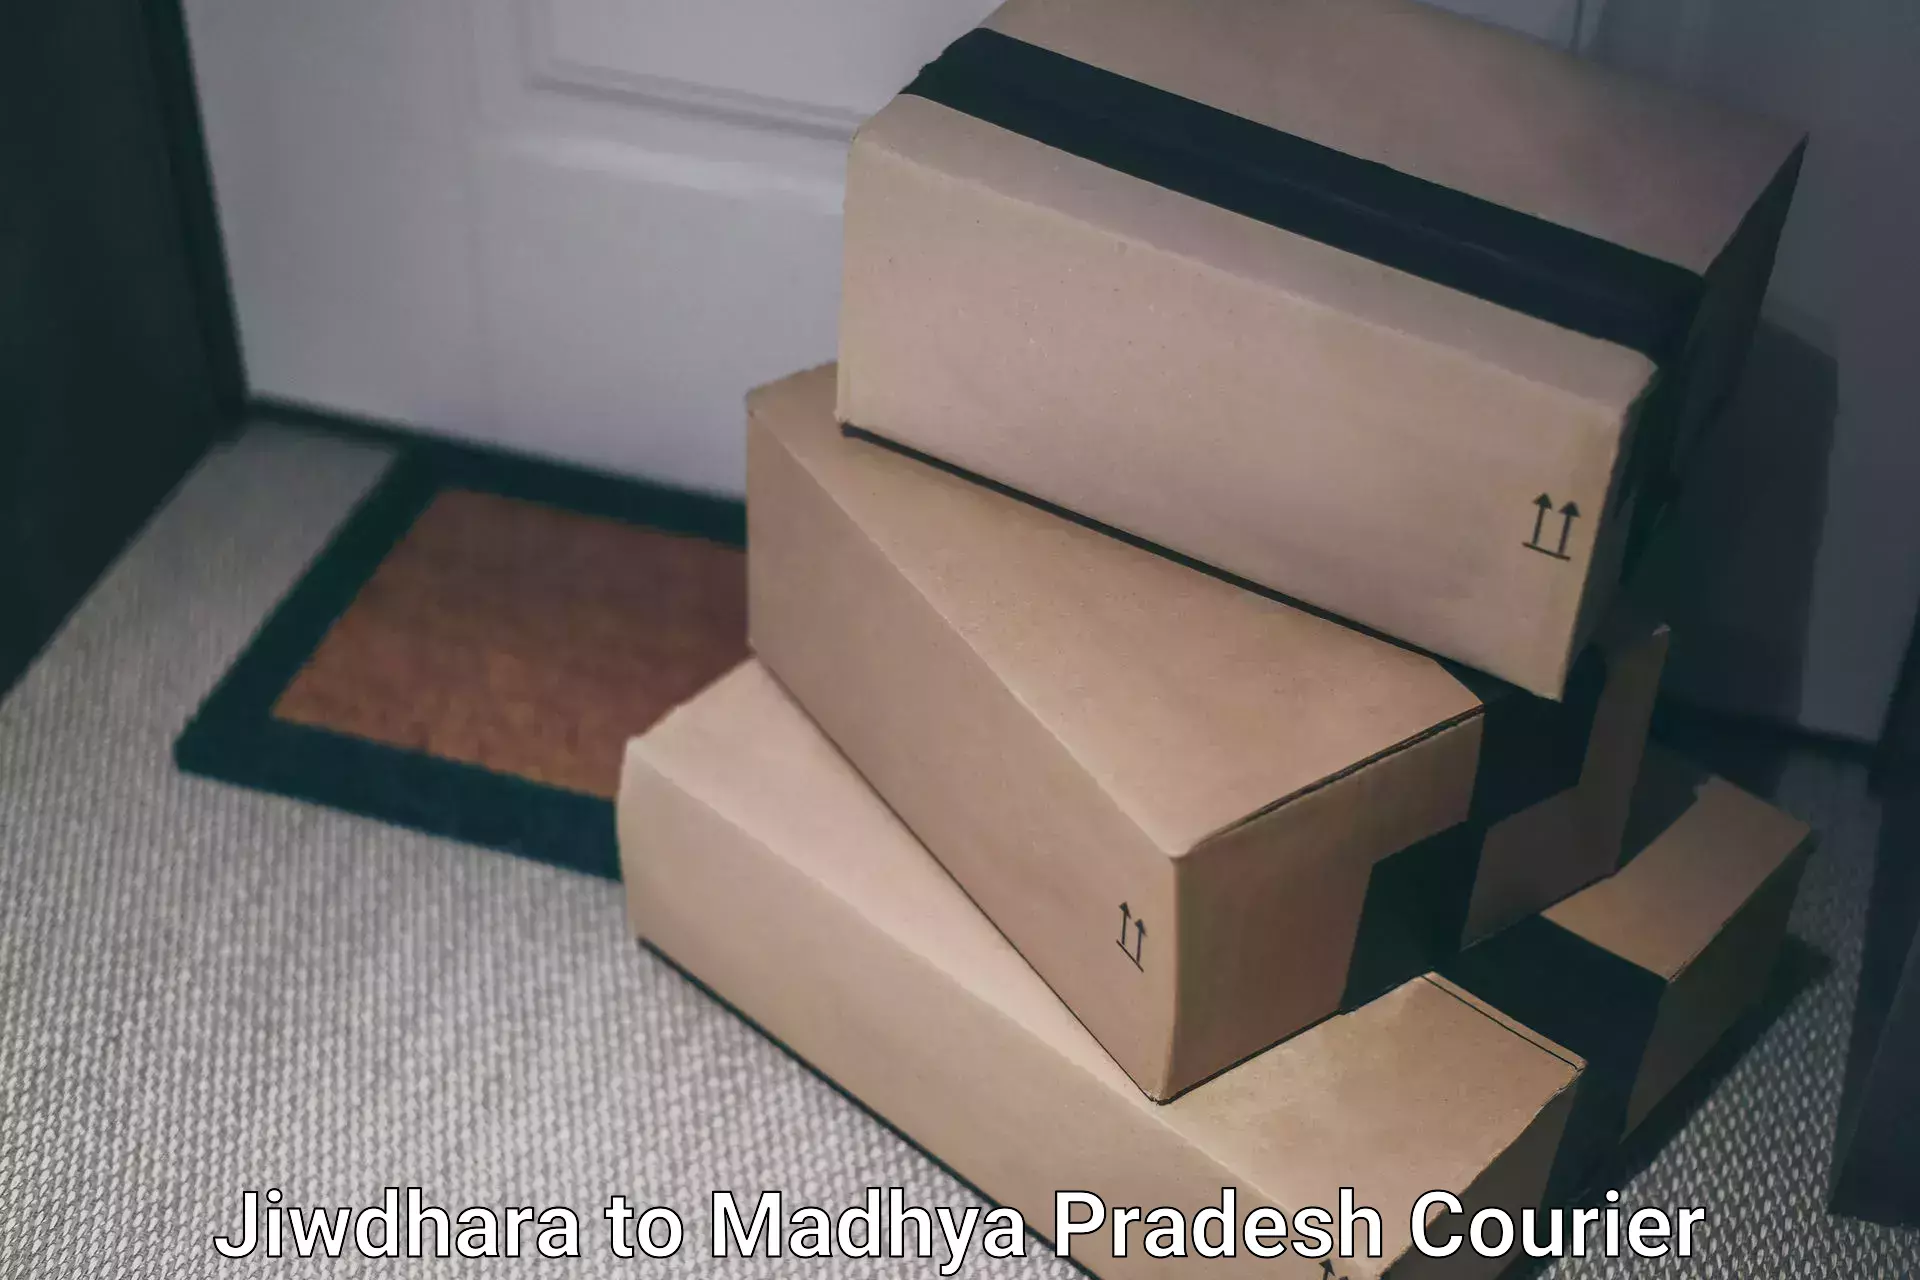 Package delivery network Jiwdhara to Madhya Pradesh